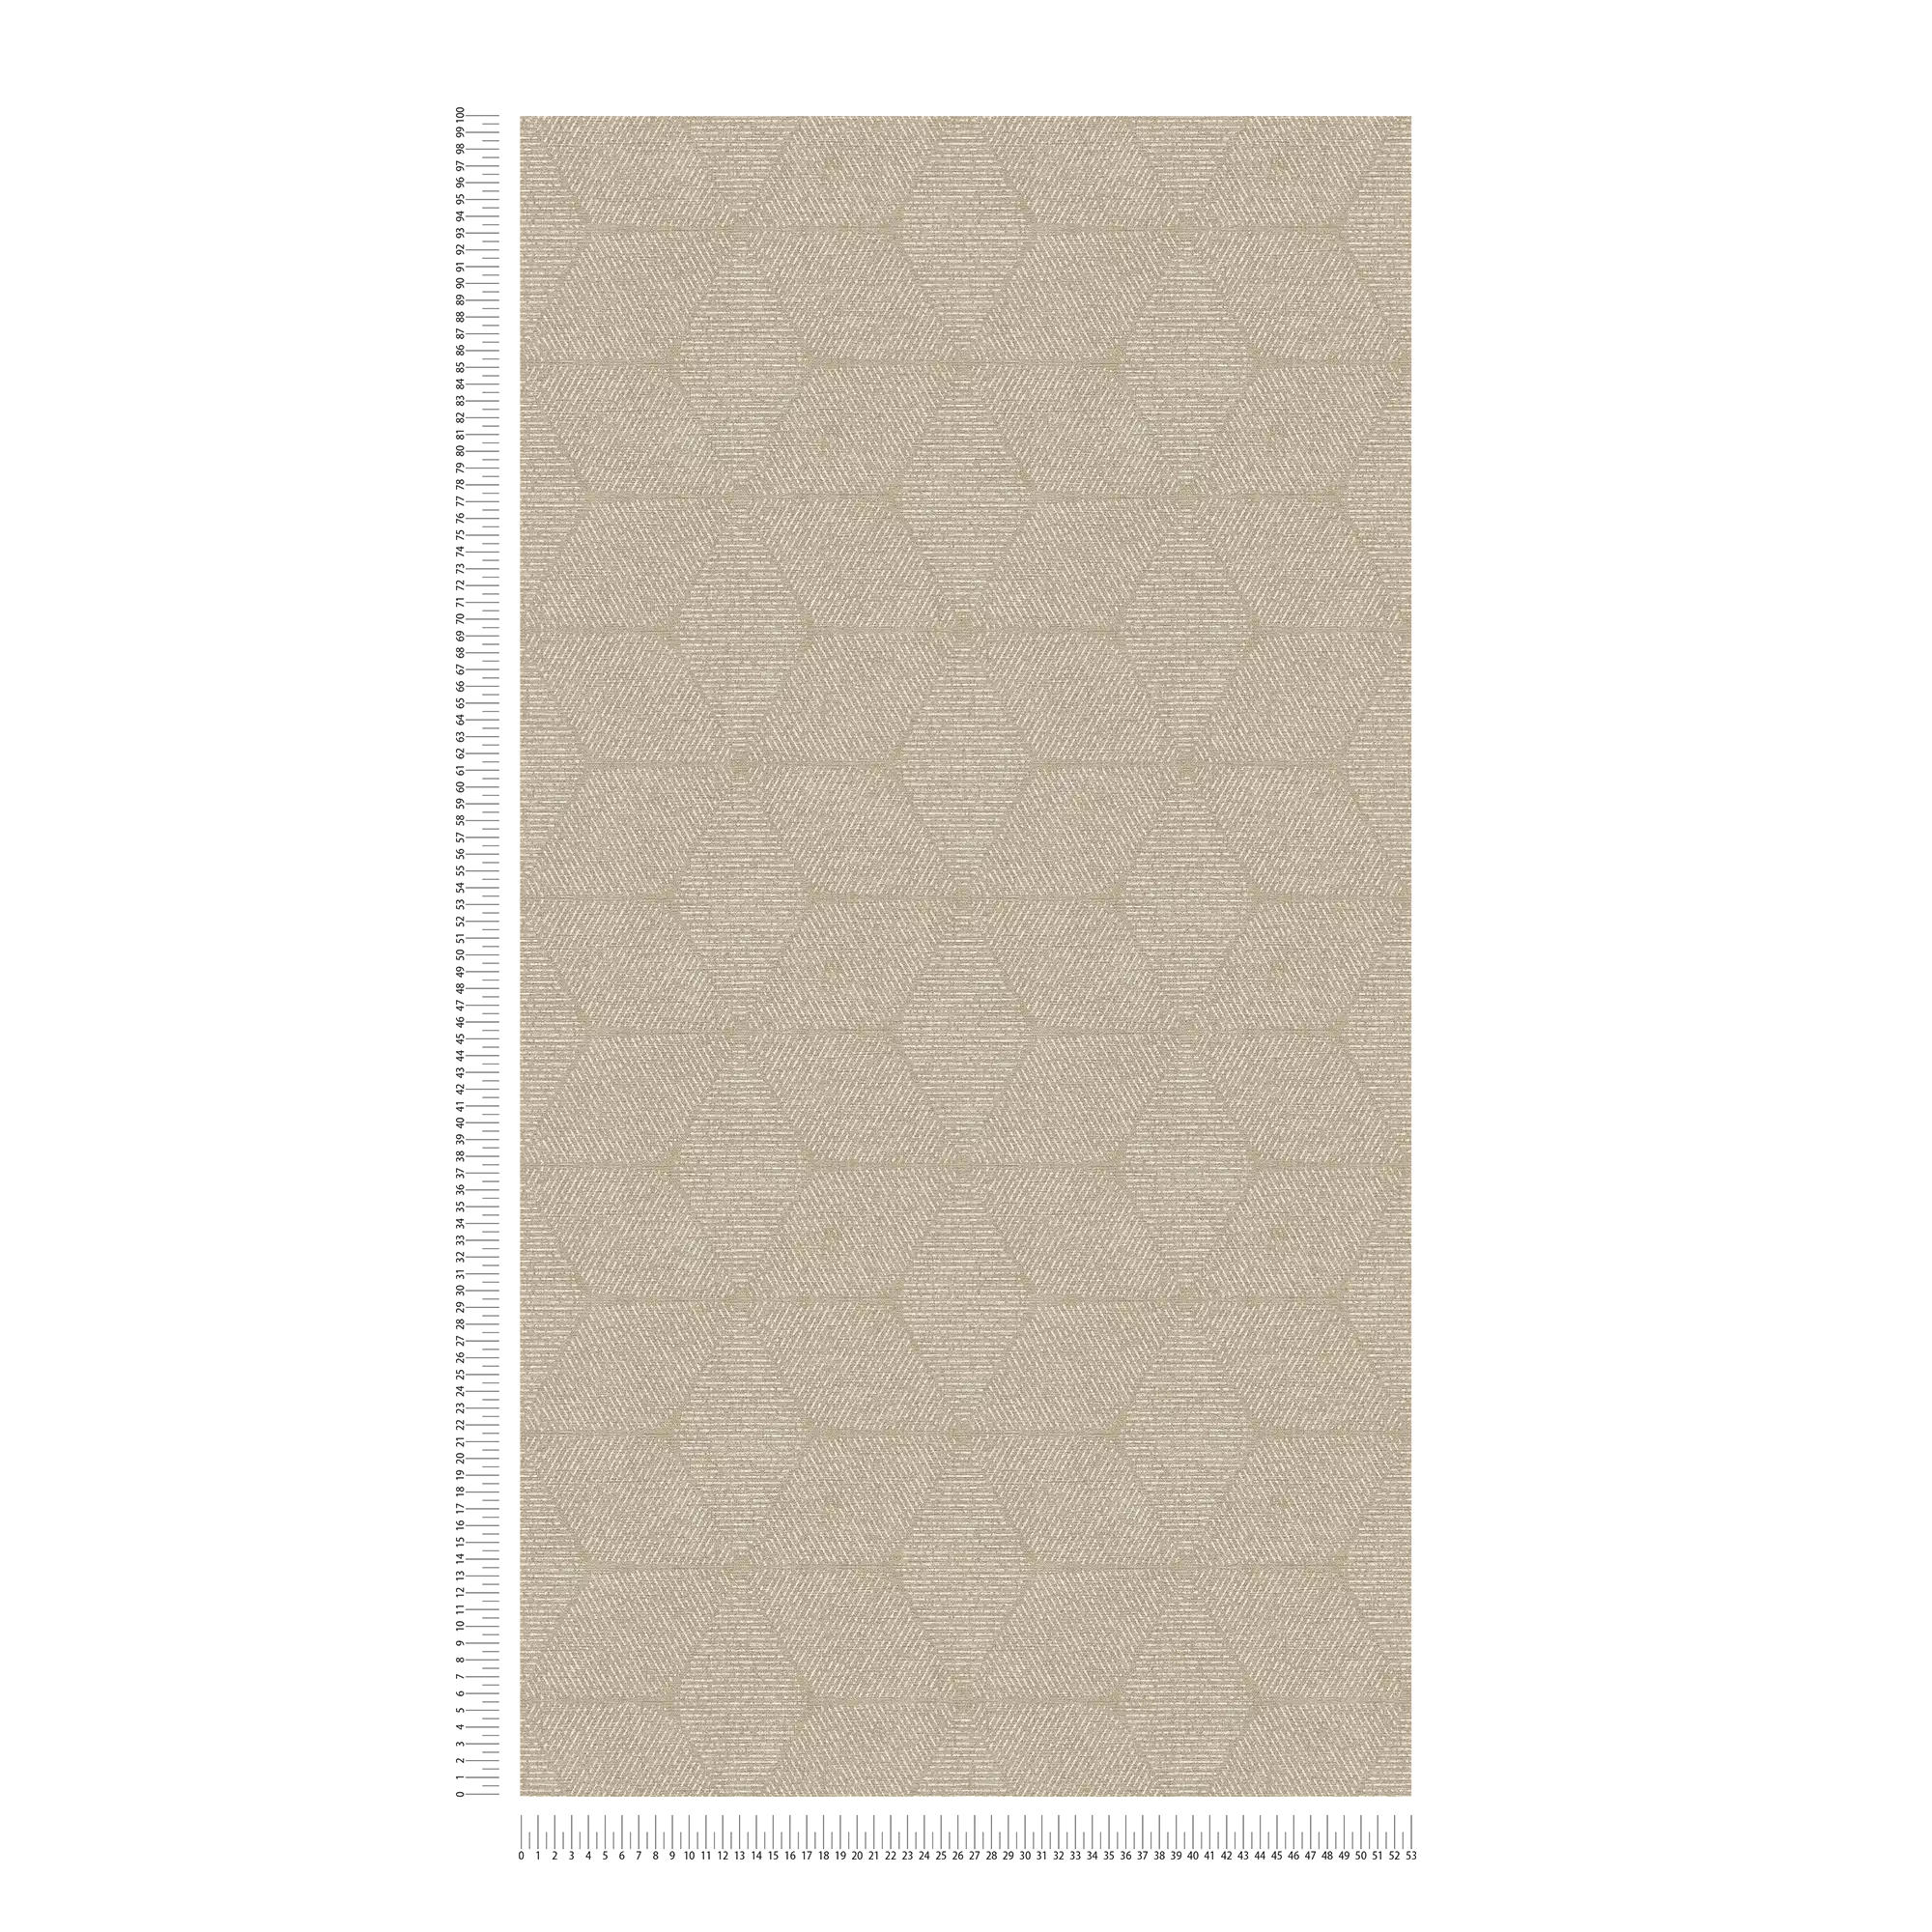             Carta da parati in tessuto non tessuto in stile naturale - beige, bianco
        